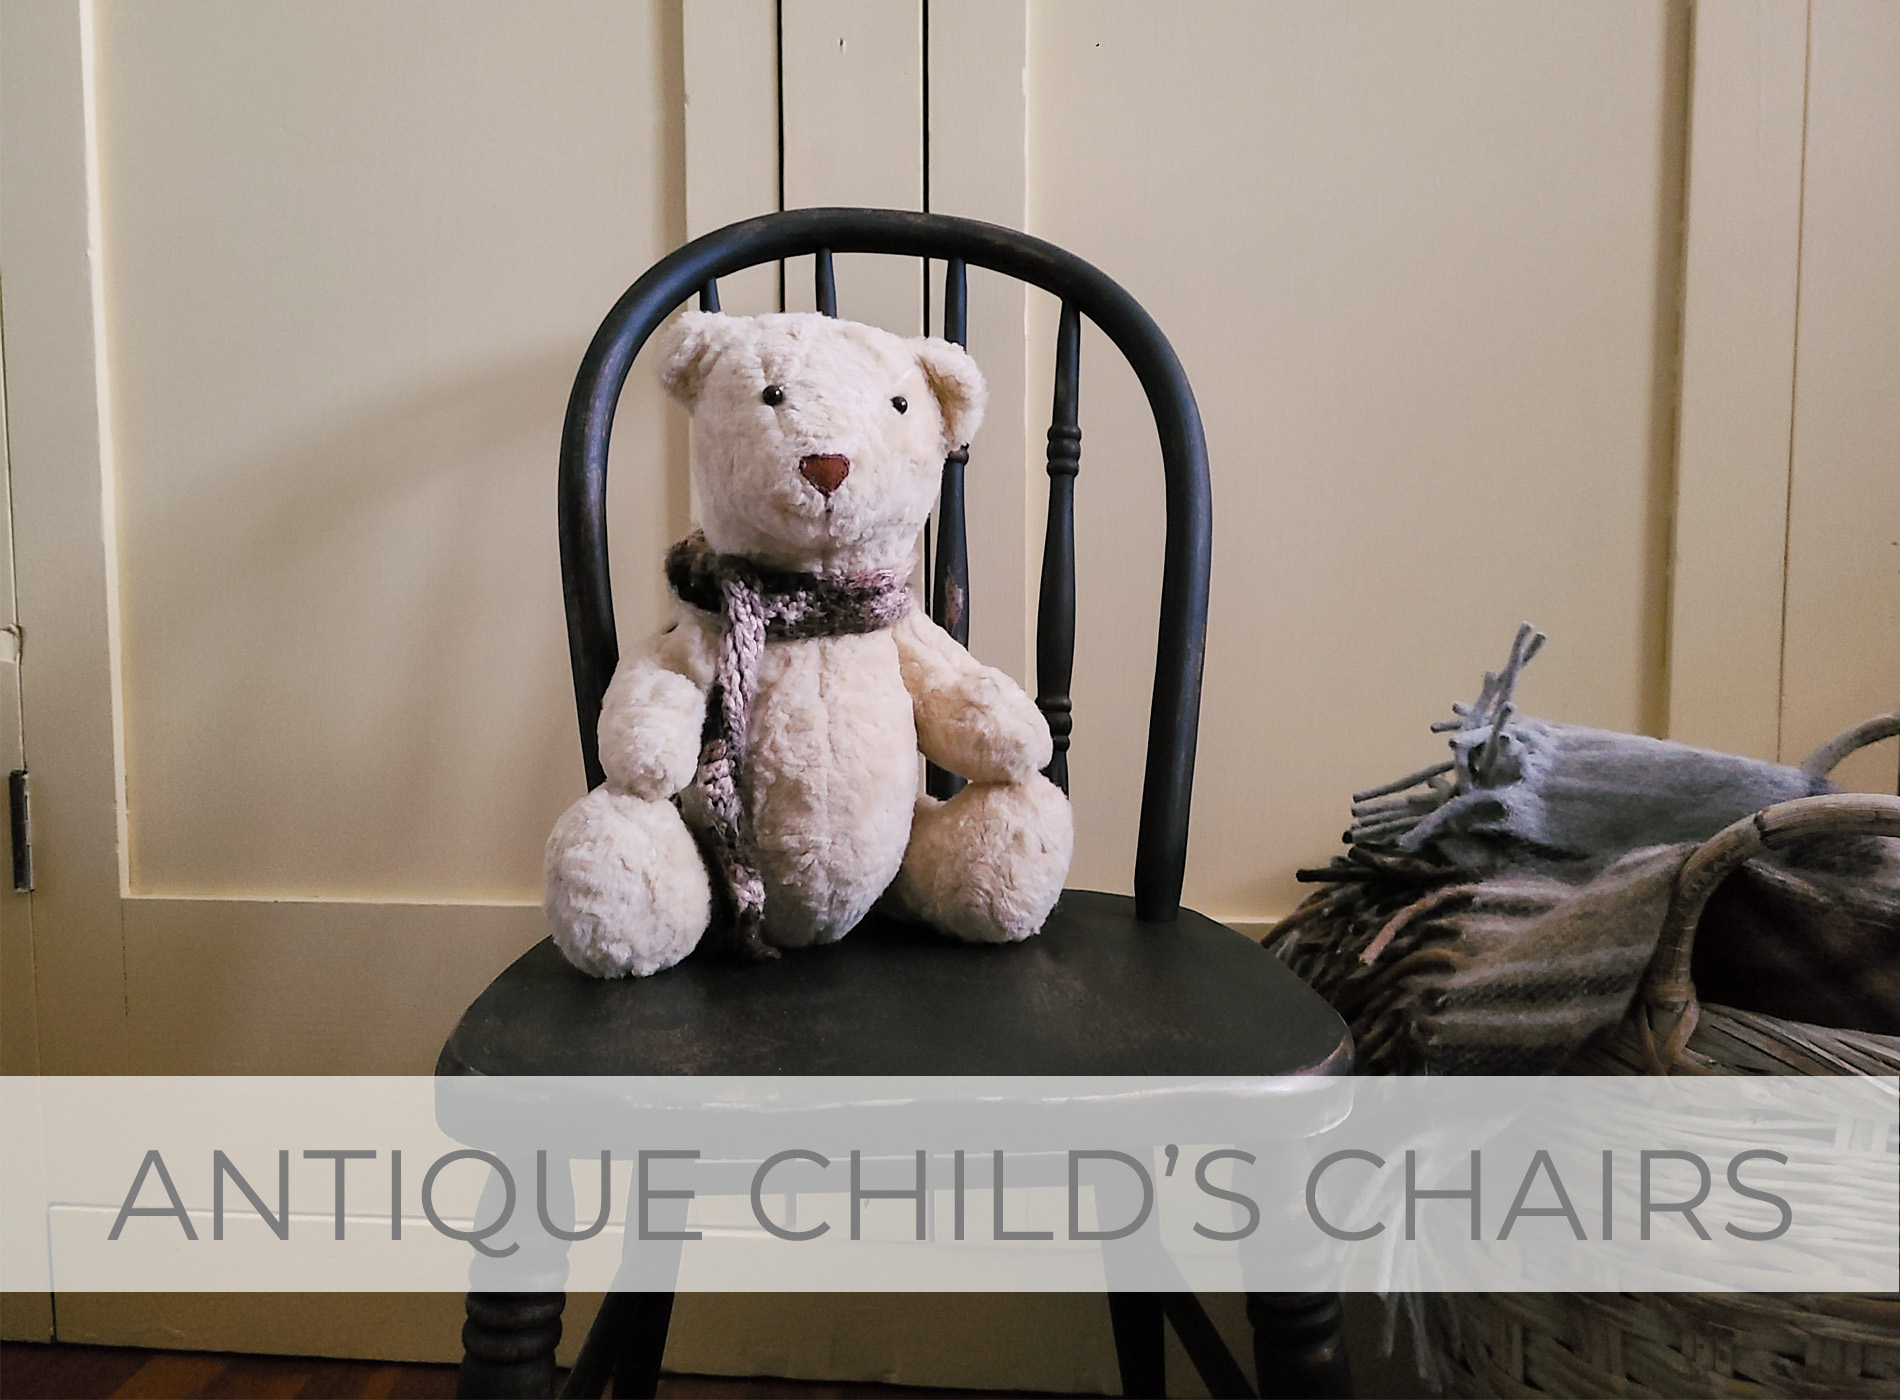 Showcase of Antique Child's Chairs Repair by Larissa of Prodigal Pieces | prodigalpieces.com #prodigalpieces